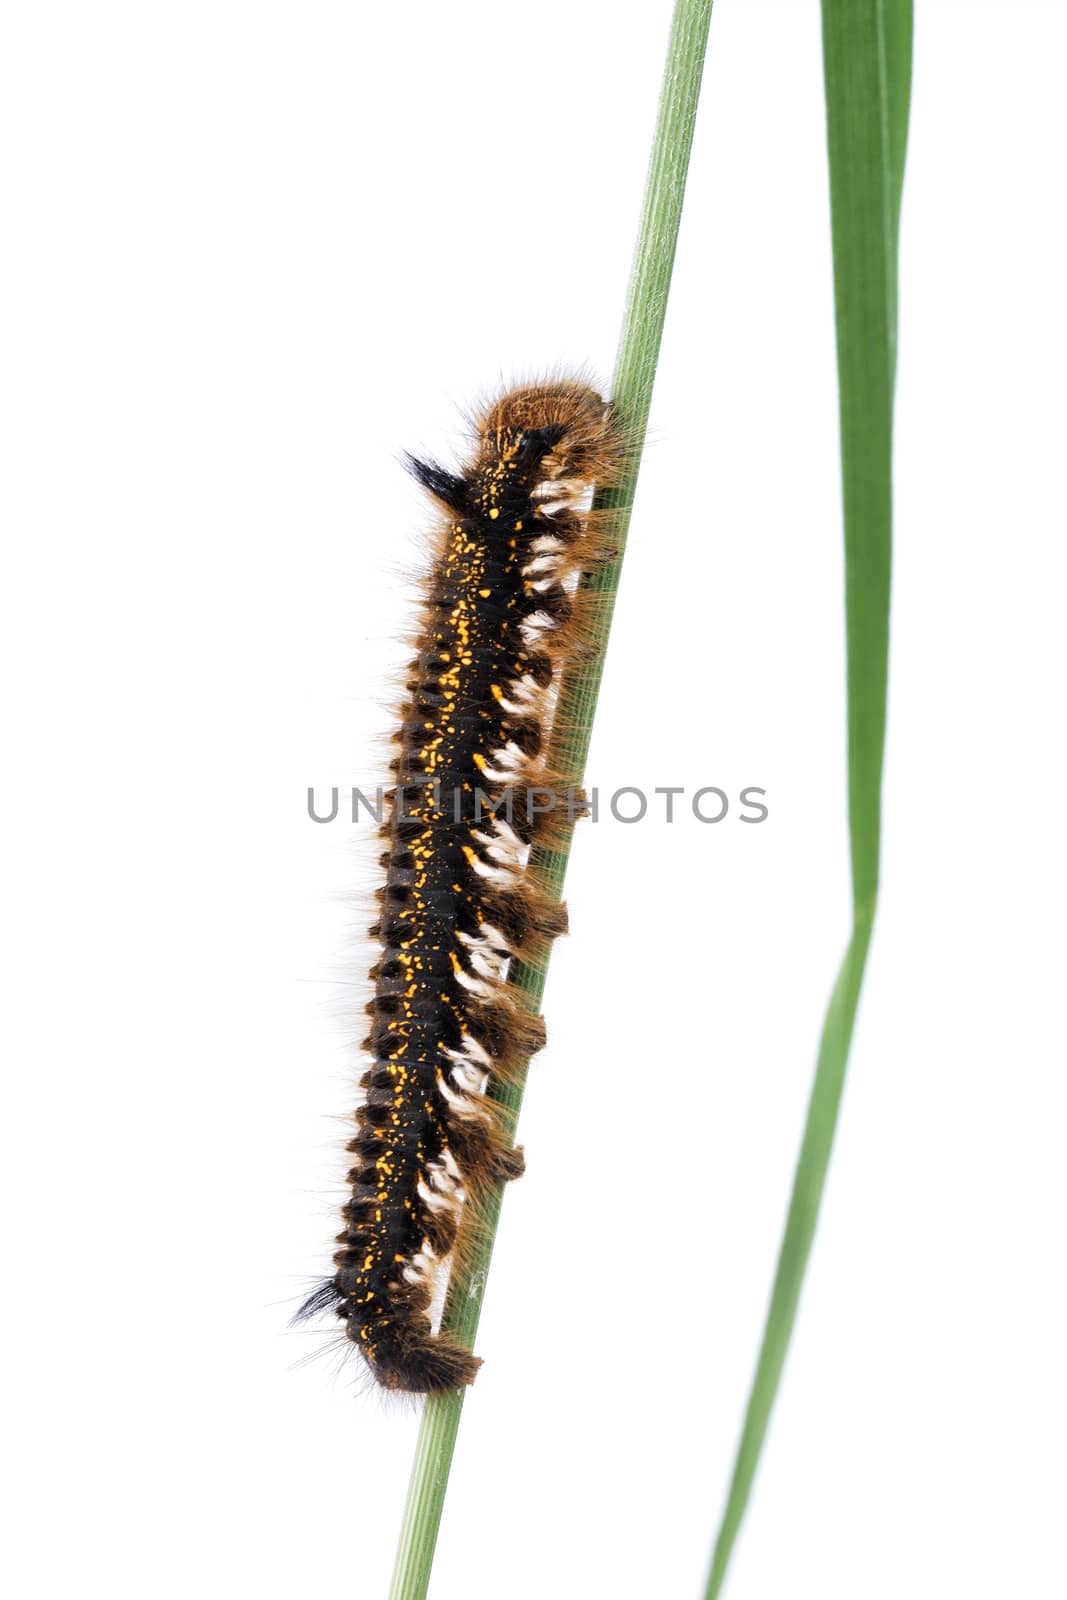 Caterpillar of Euthrix potatoria on a white background by neryx